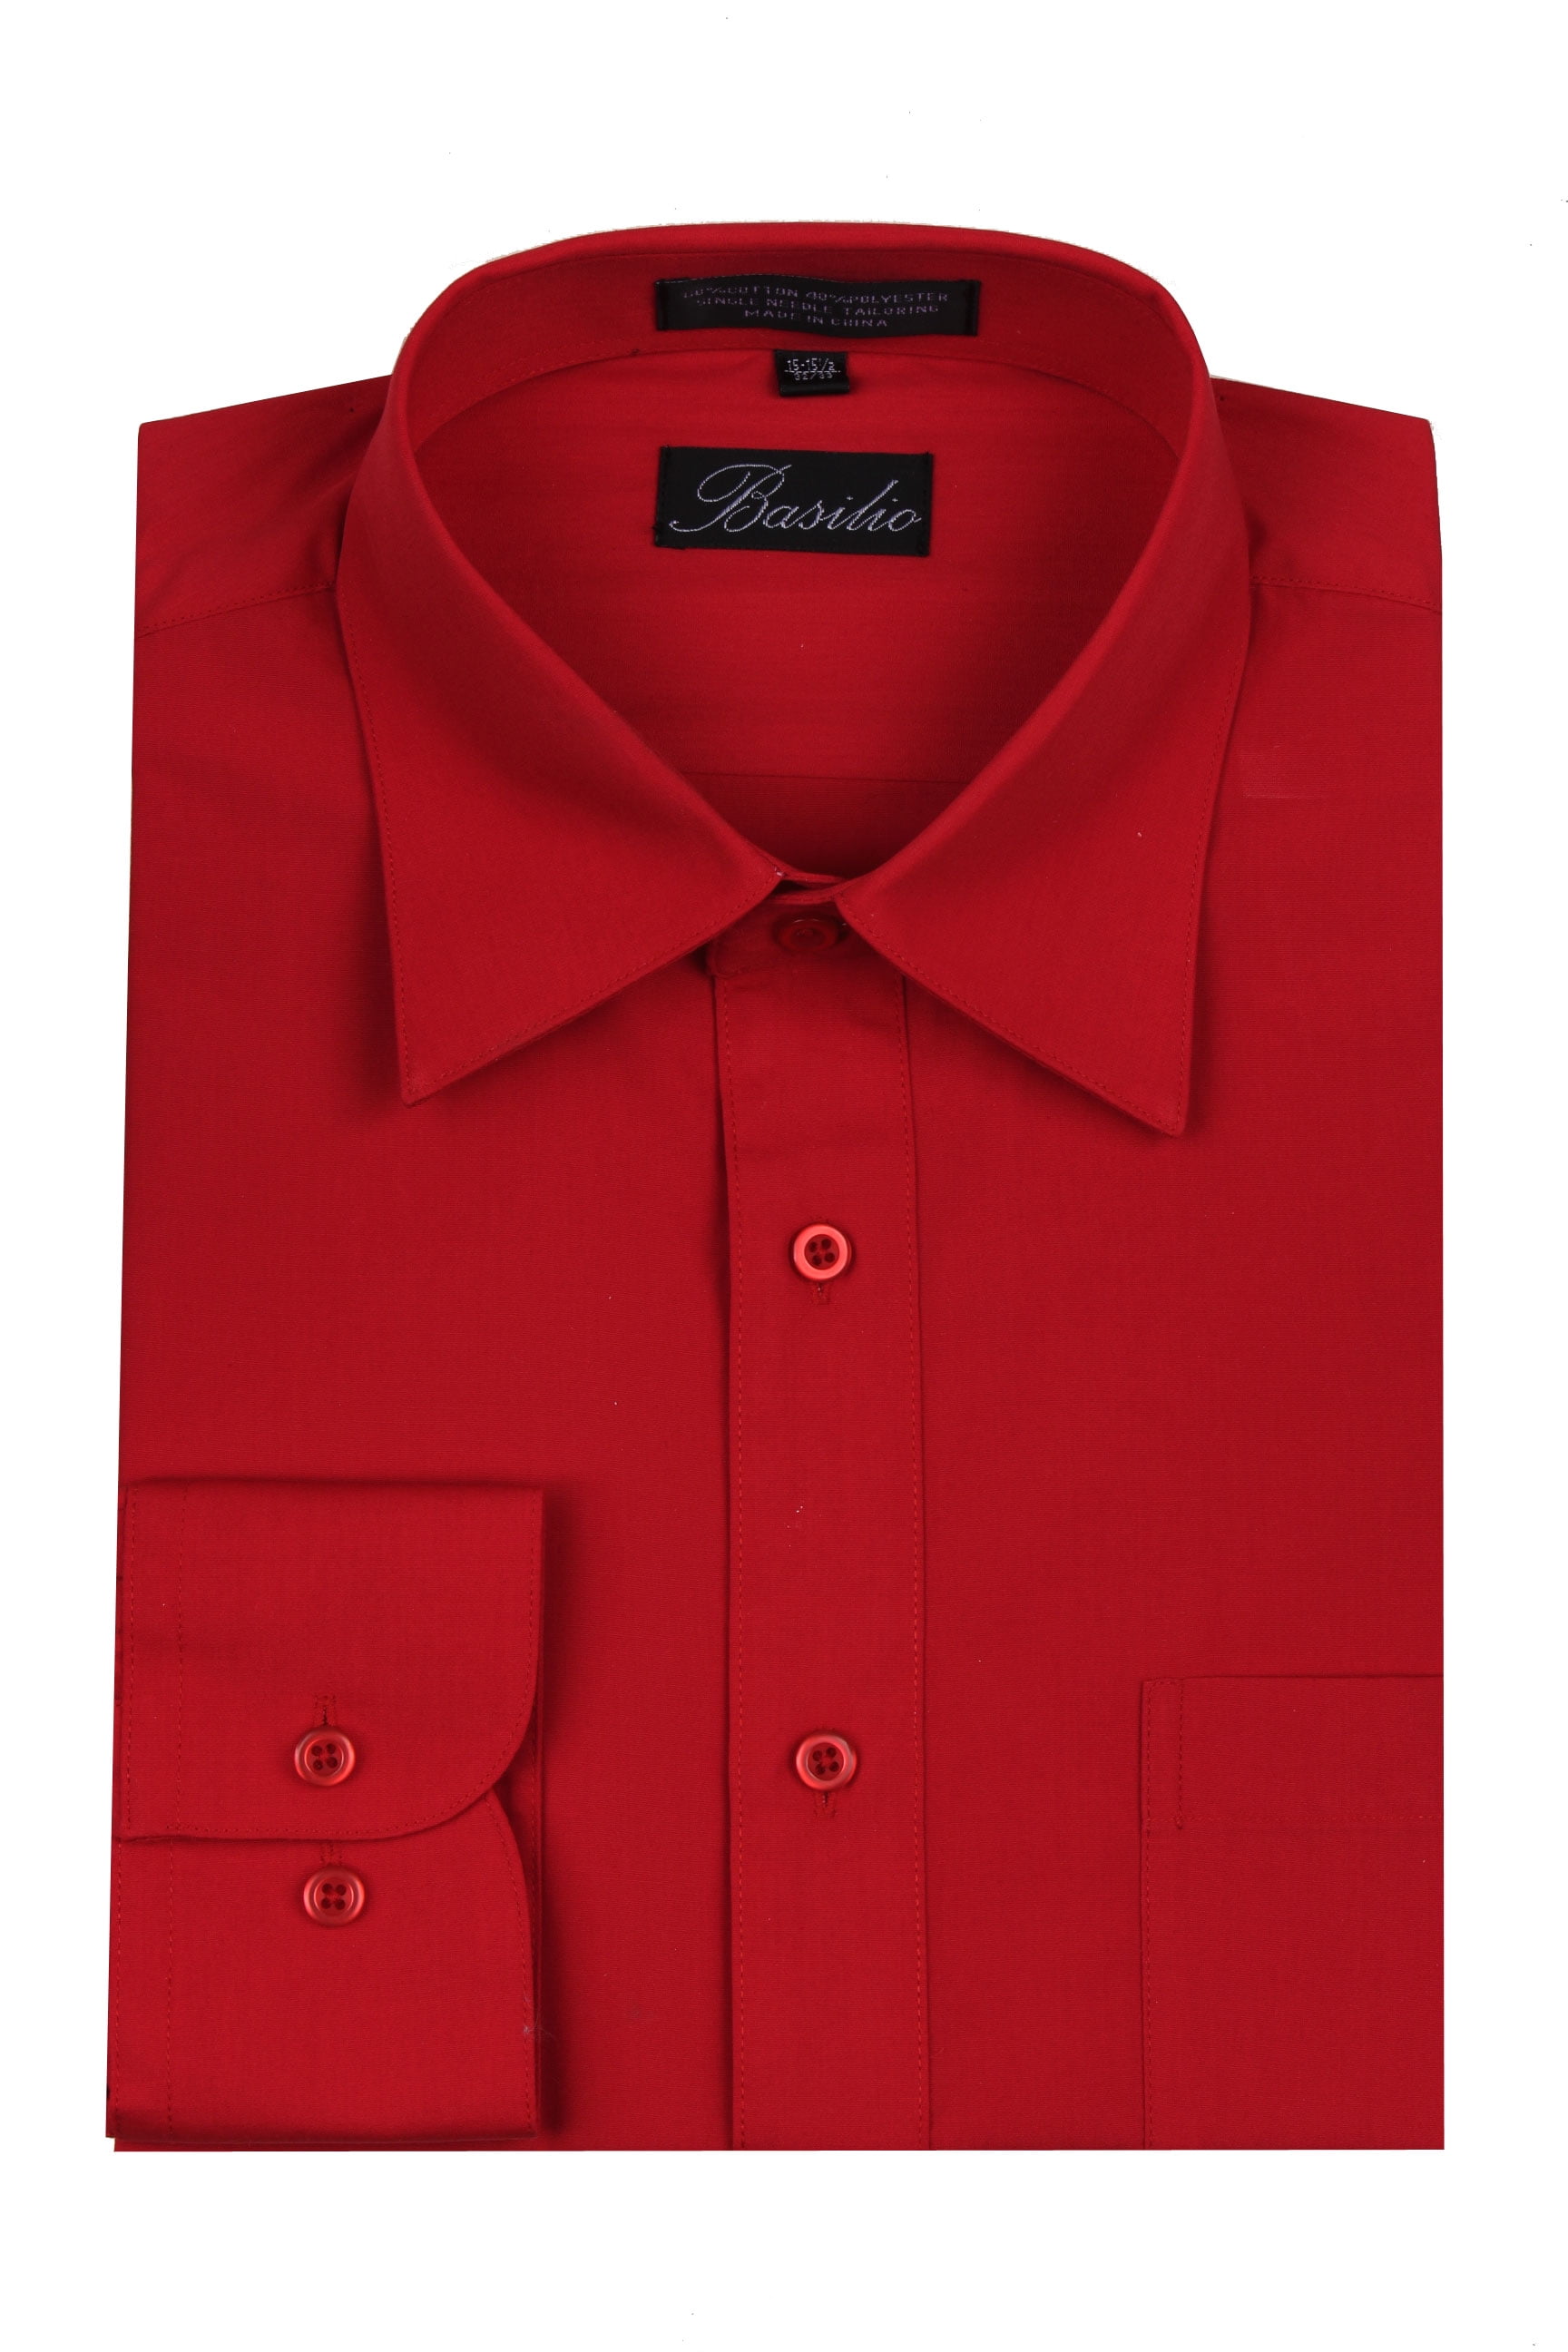 Basilio - Men's Basilio Convertible Cuff Solid Dress Shirt - Many ...